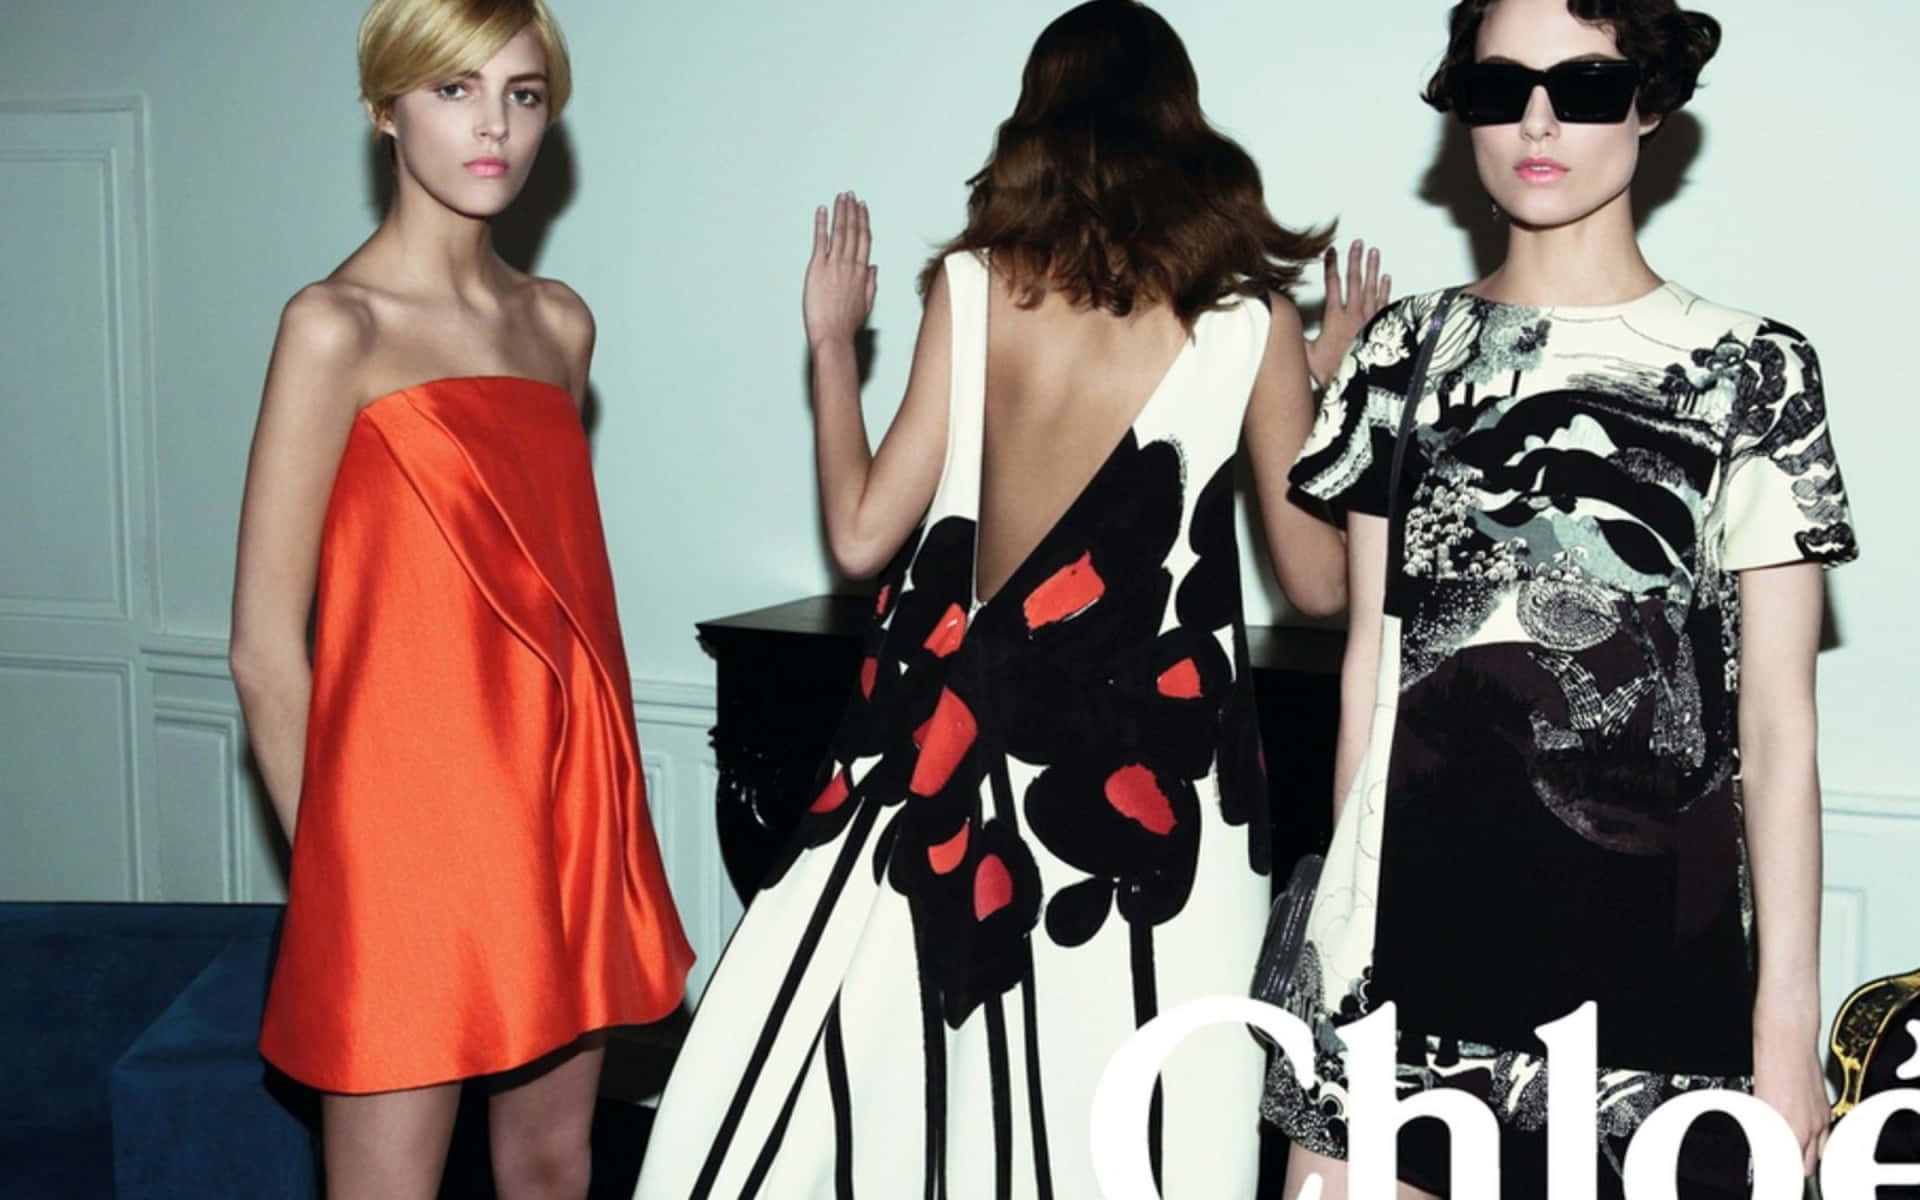 Download Spring Fashion 2560 X 1600 Wallpaper Wallpaper | Wallpapers.com